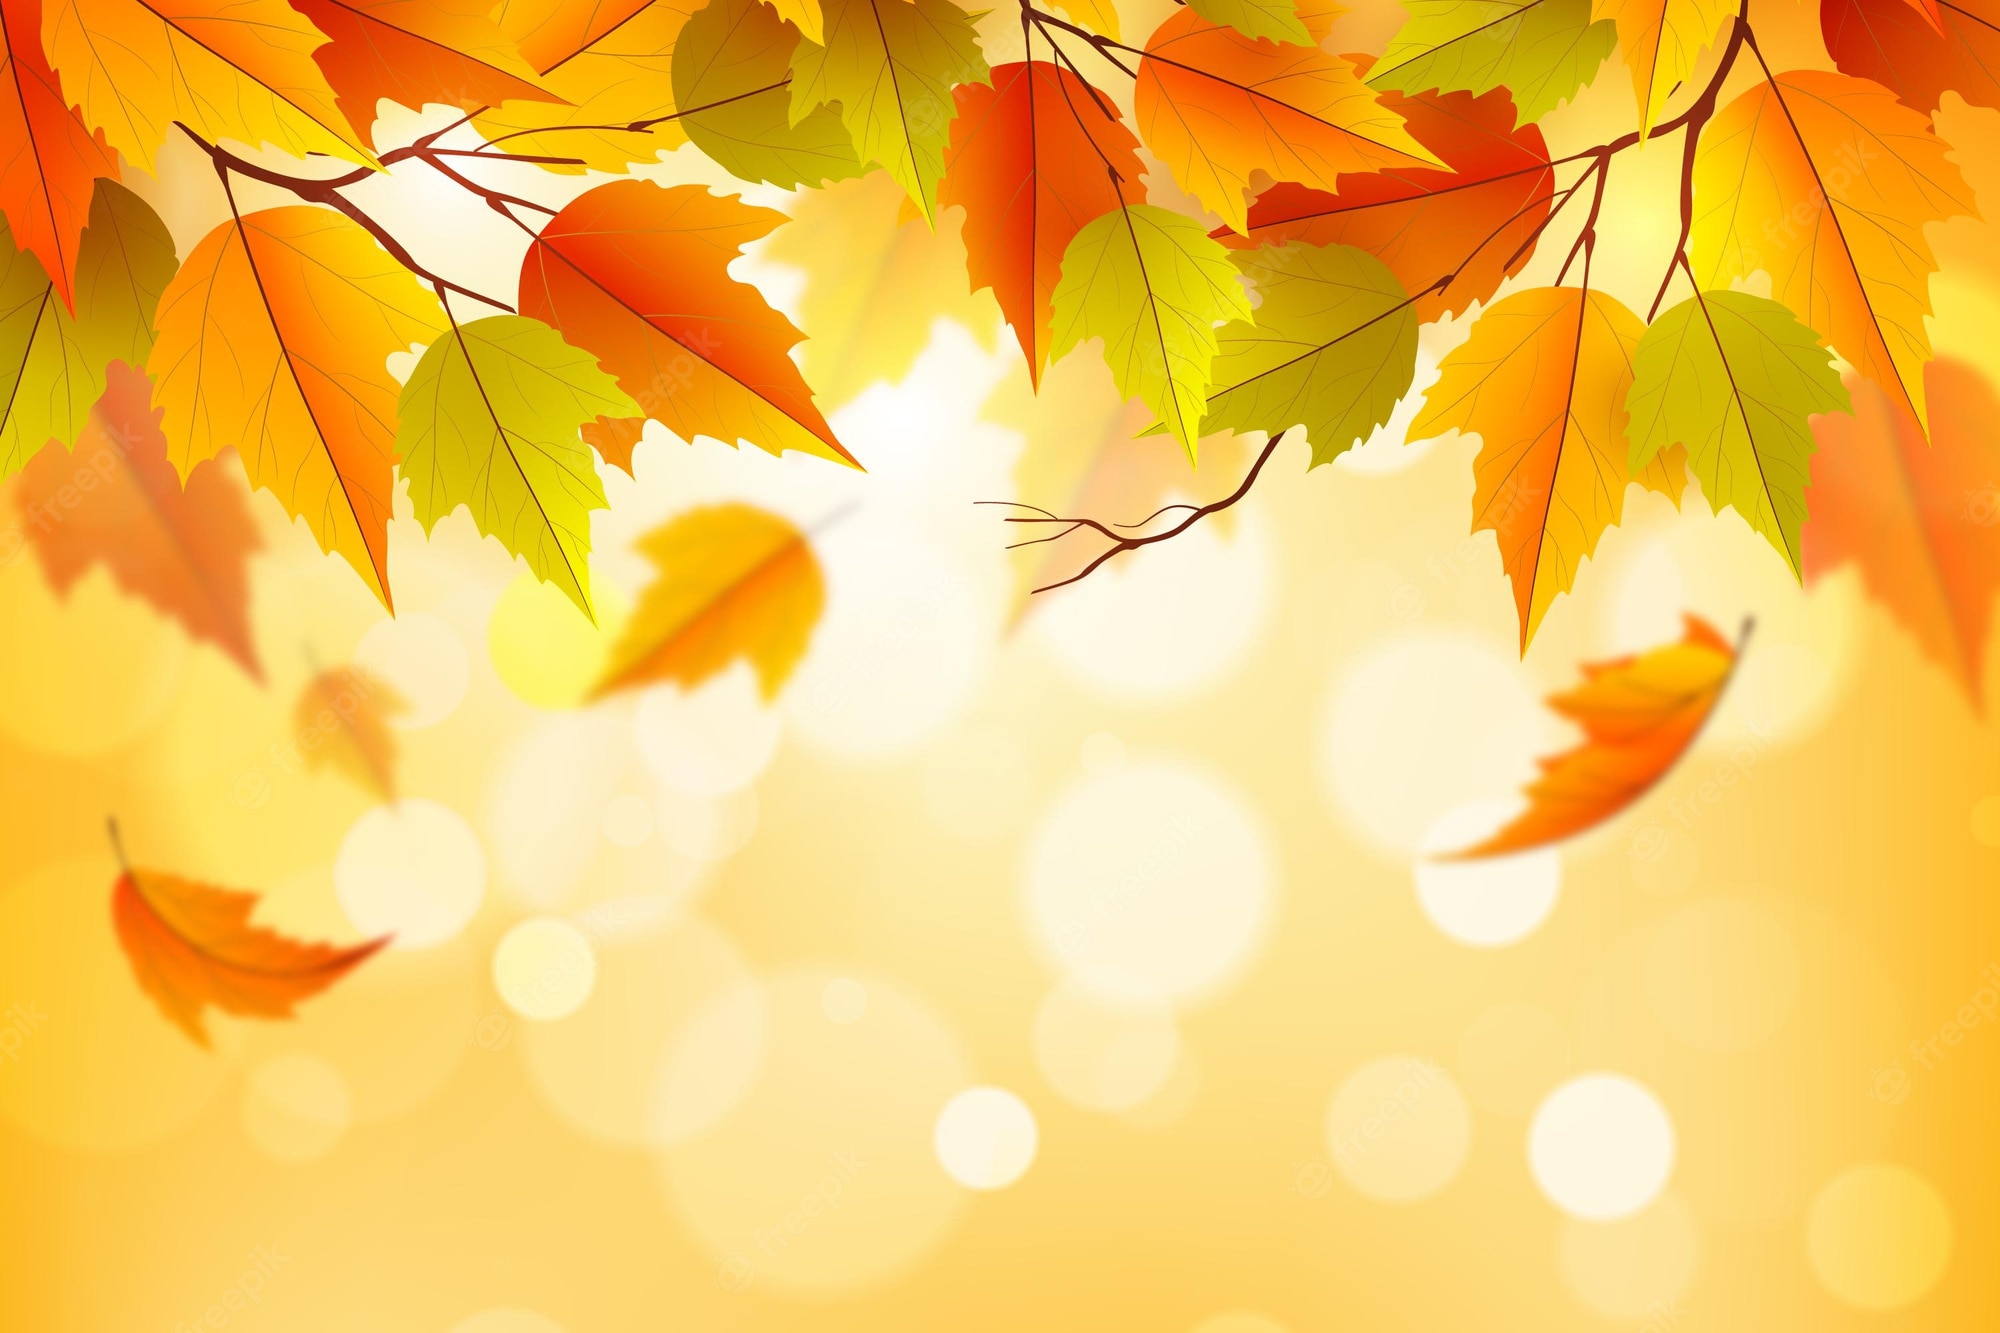 30,000+ Free Autumn Leaves & Autumn Images - Pixabay